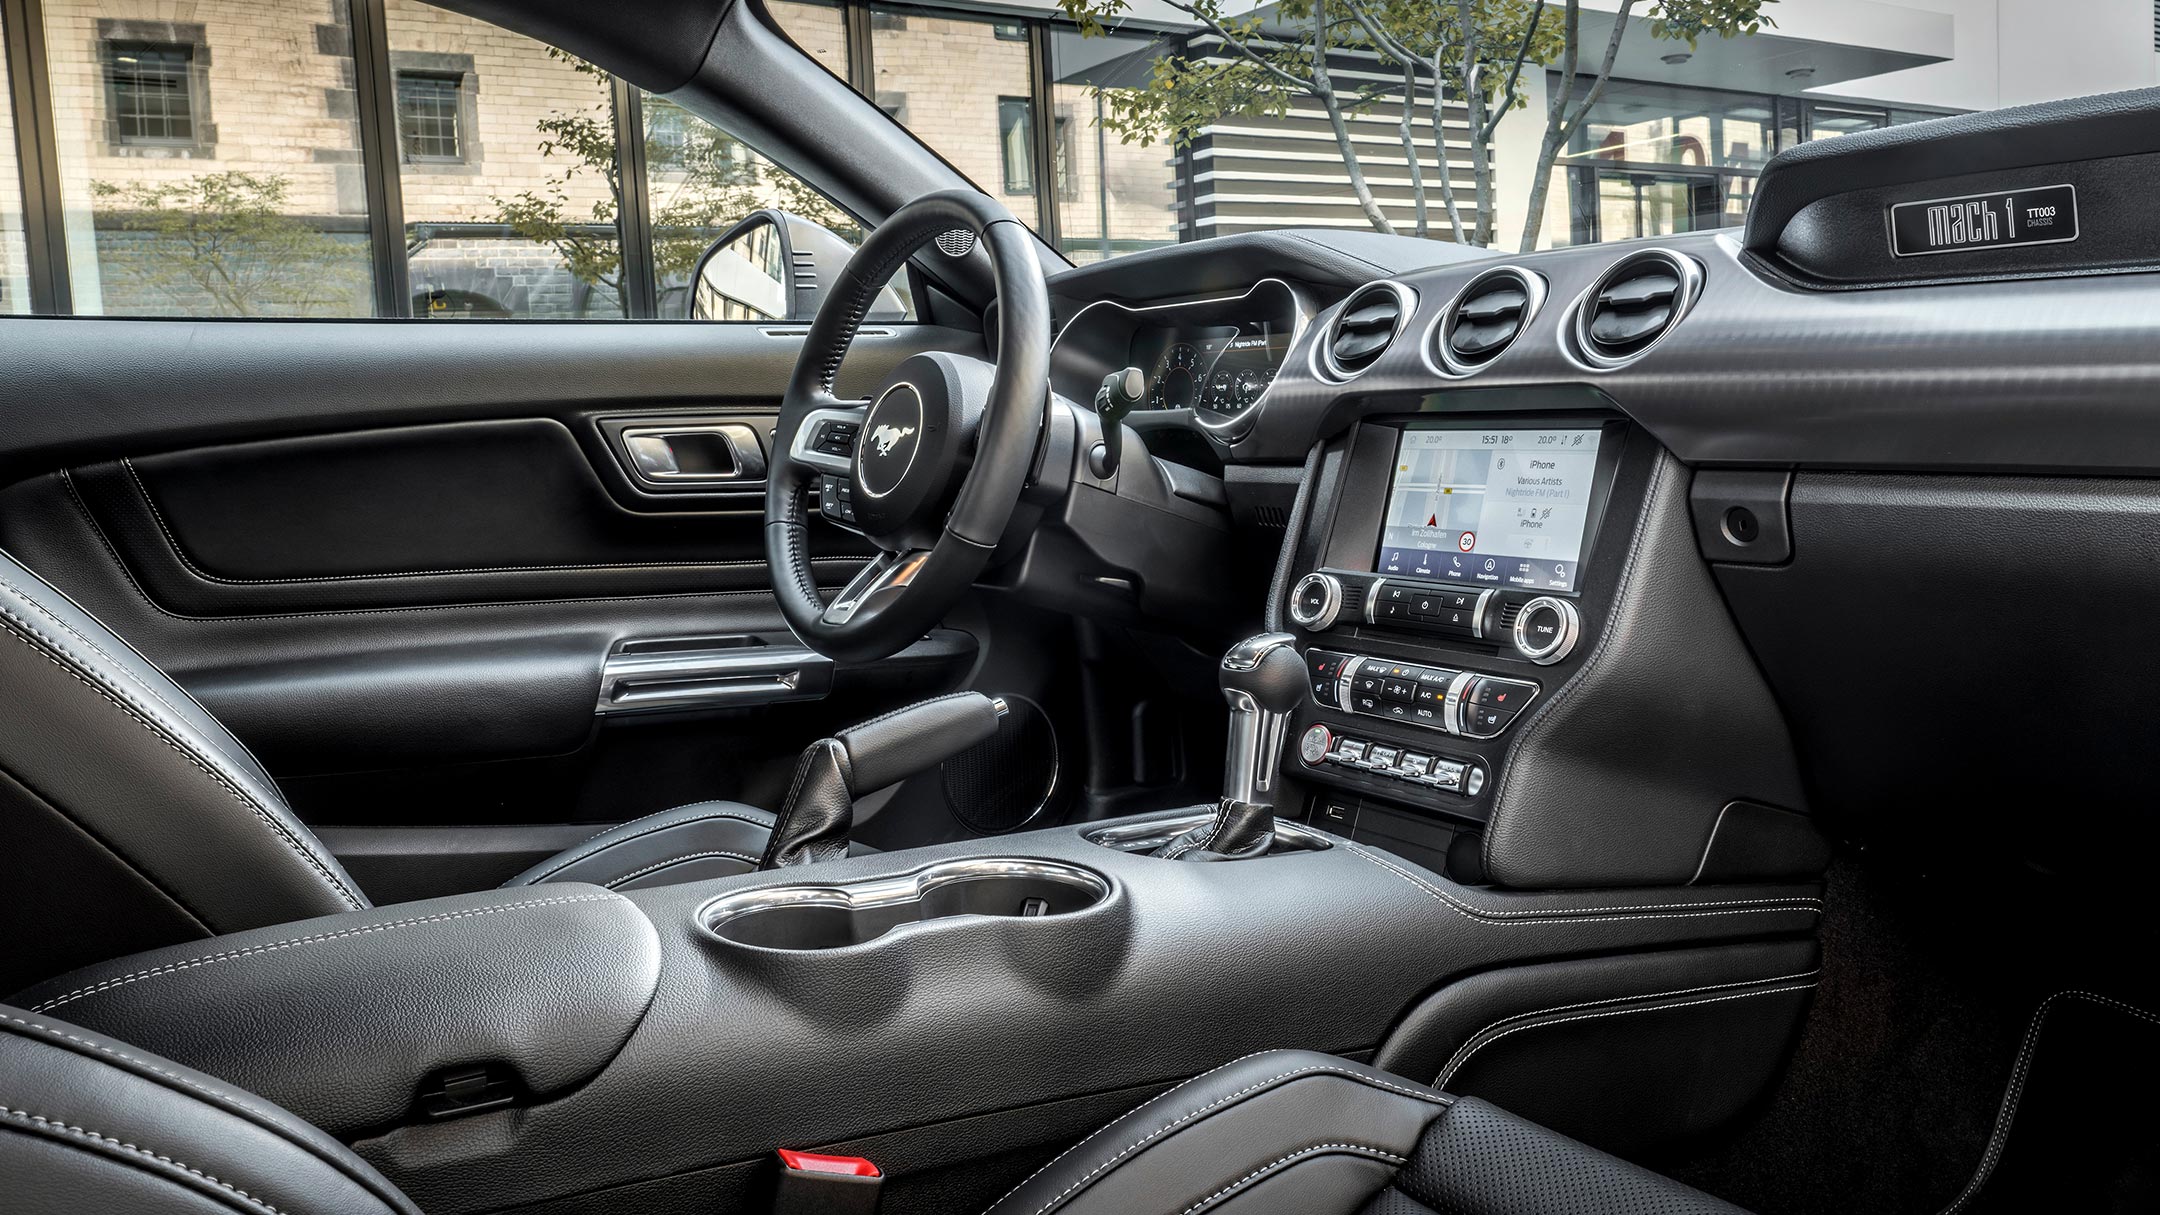 Ford Mustang Mach 1 interior seats